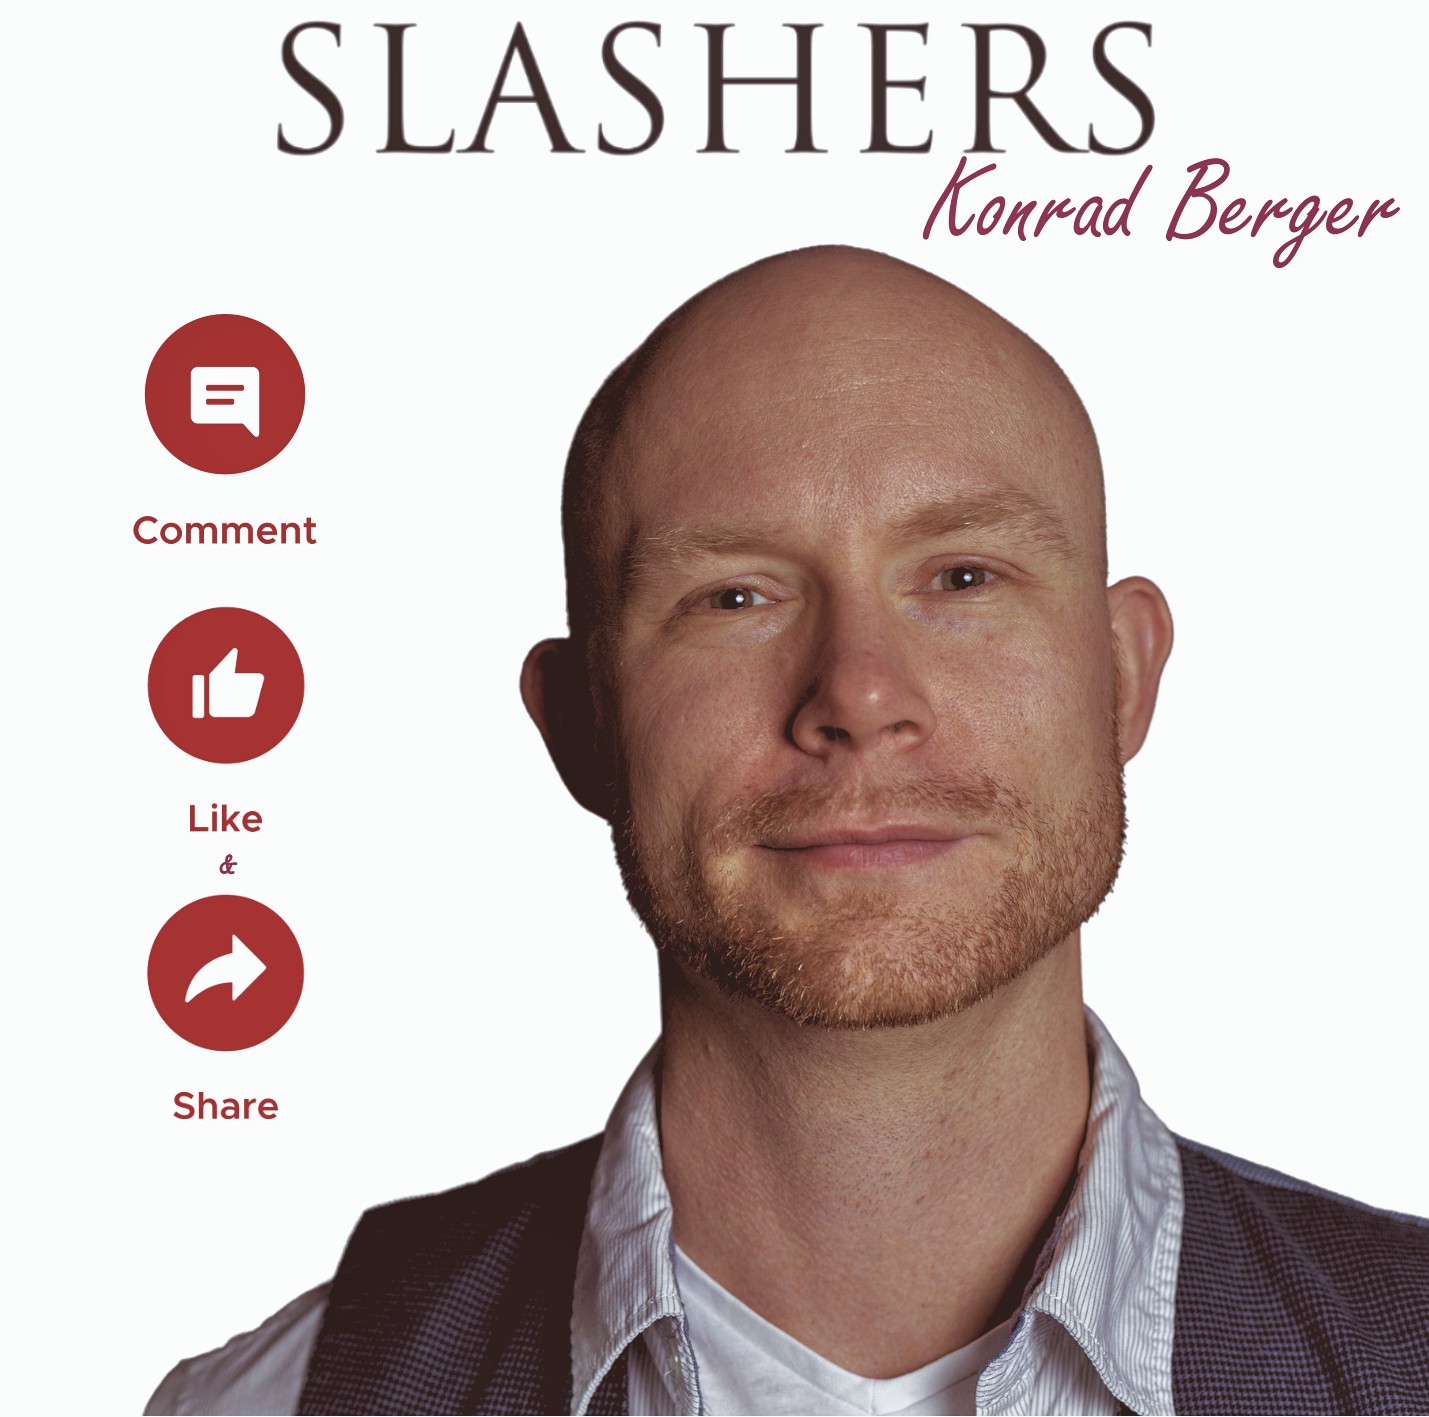 SLASHERS – “Comment, Like & Share”